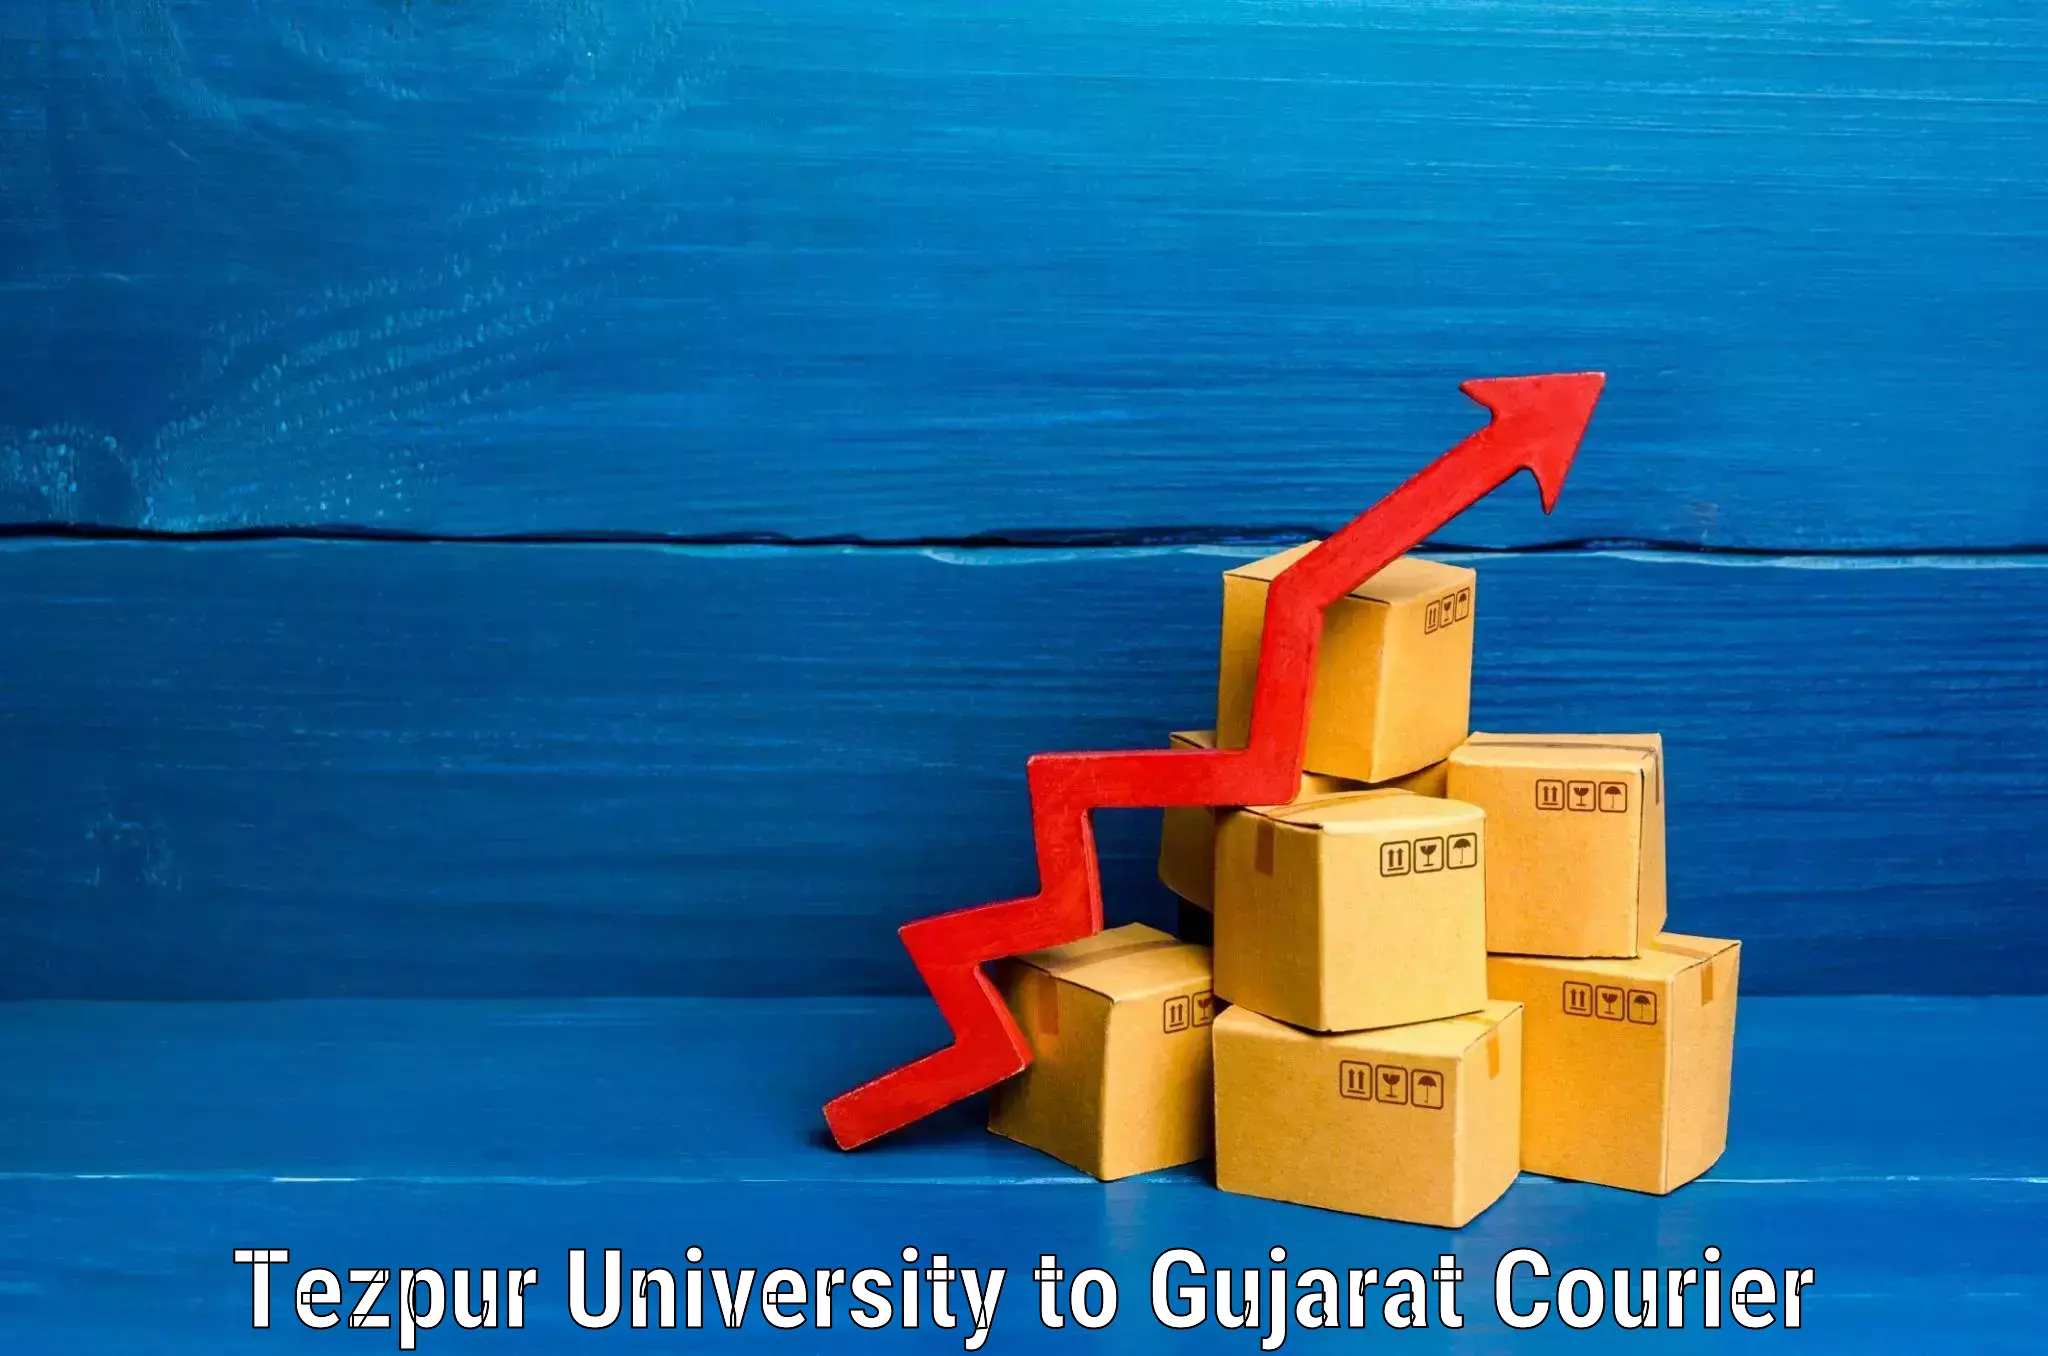 Baggage relocation service Tezpur University to Gujarat